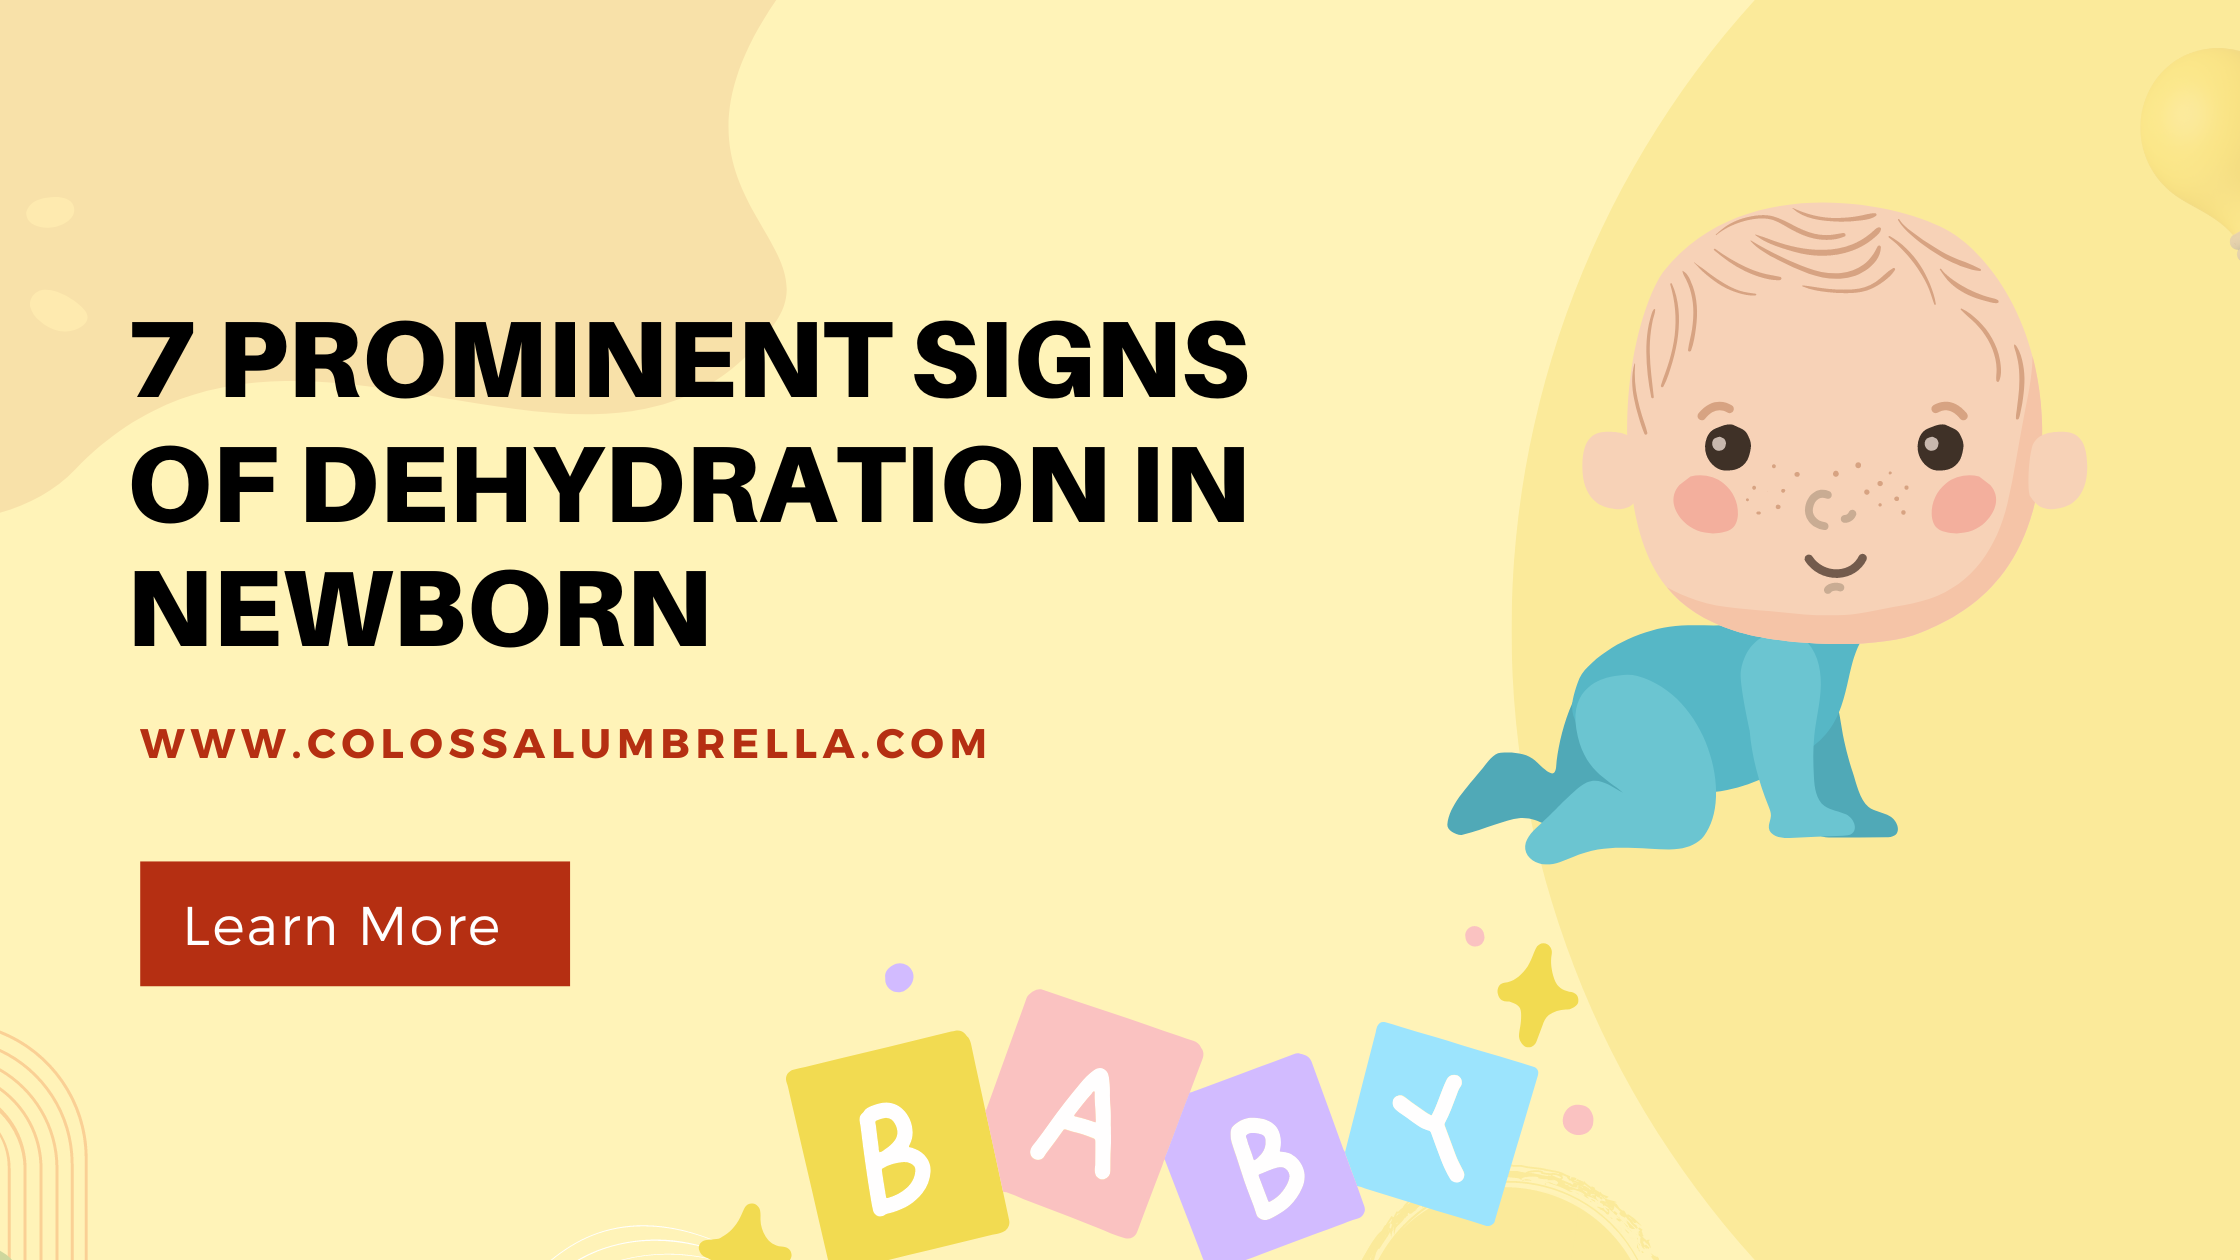 Signs of dehydration in newborn